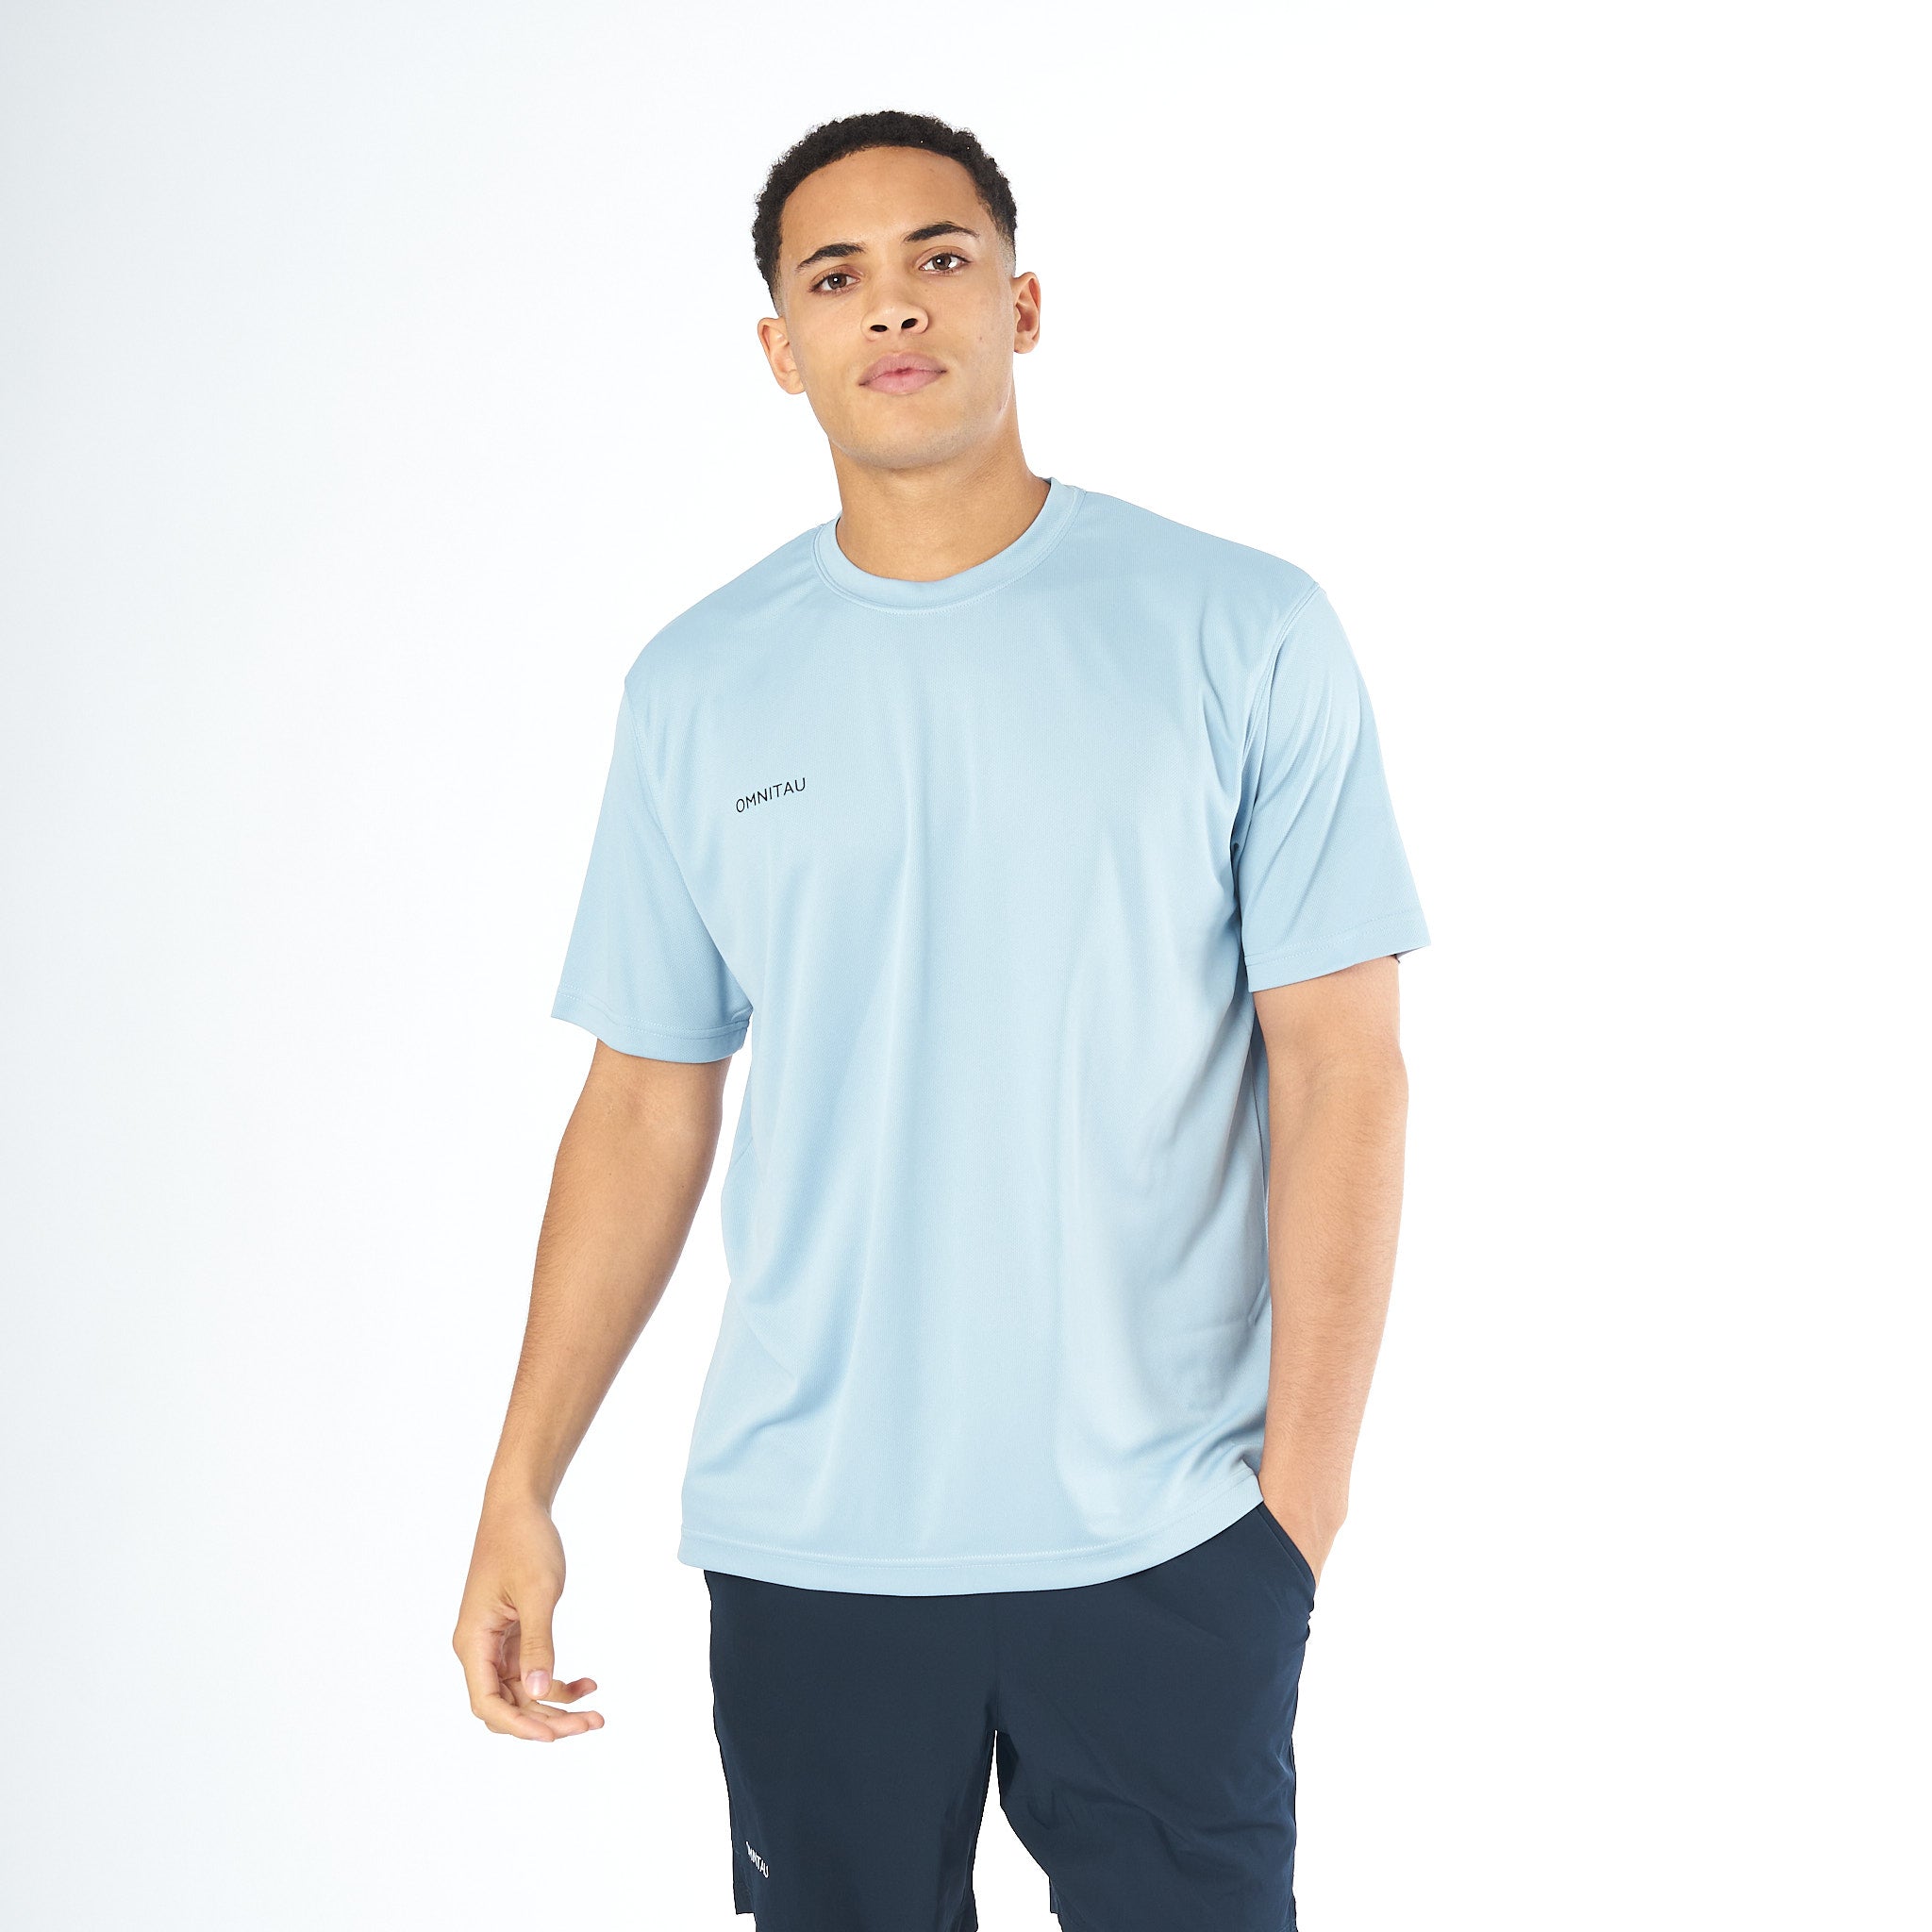 Omnitau Men's Team Sports Core Football Shirt - Sky Blue